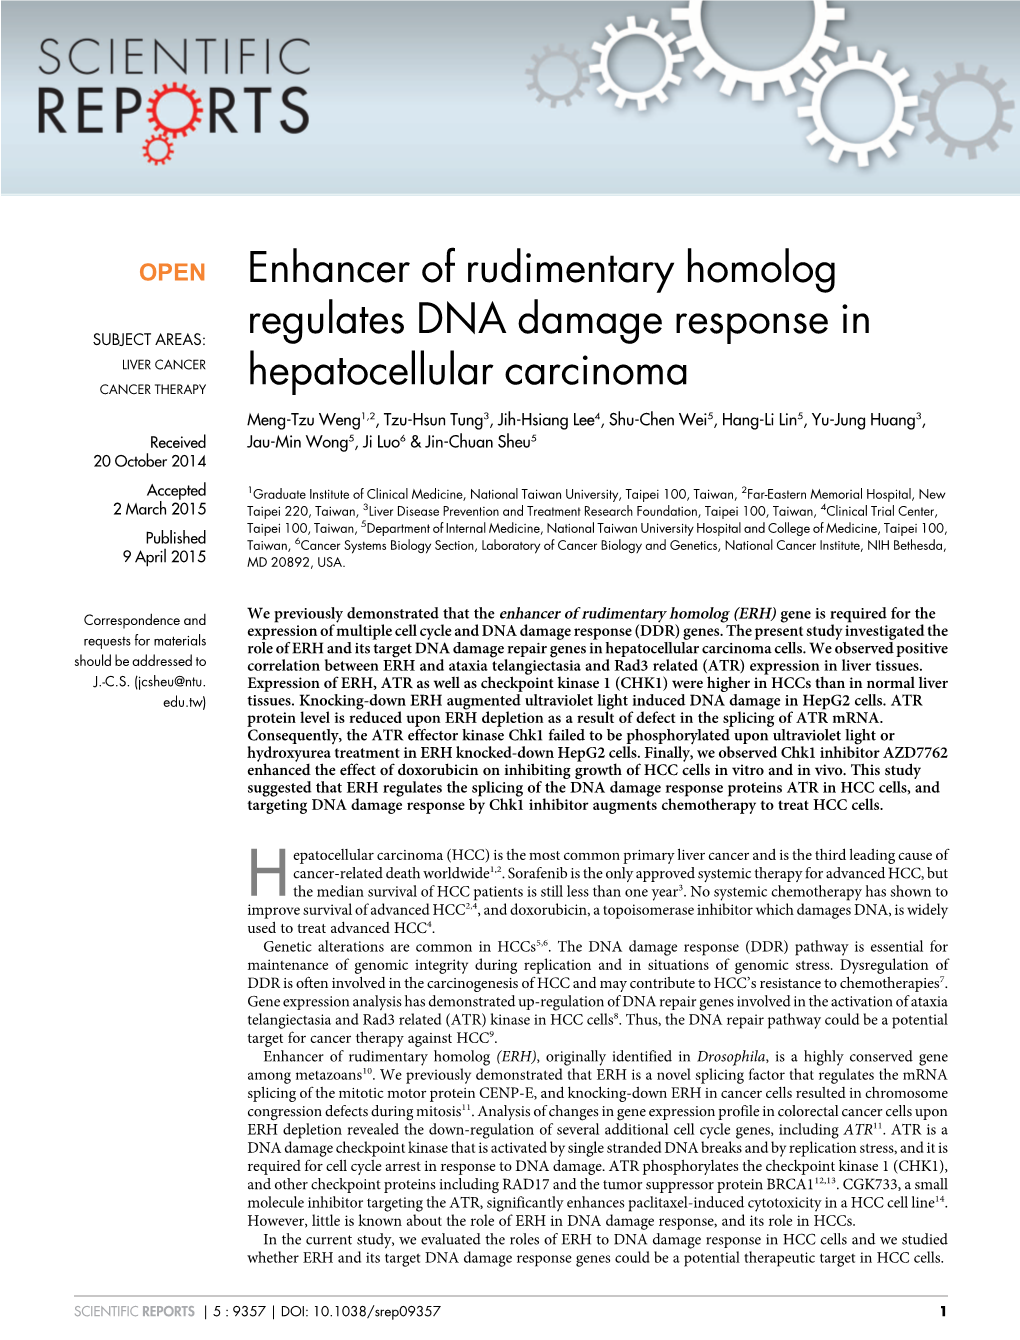 Enhancer of Rudimentary Homolog Regulates DNA Damage Response In